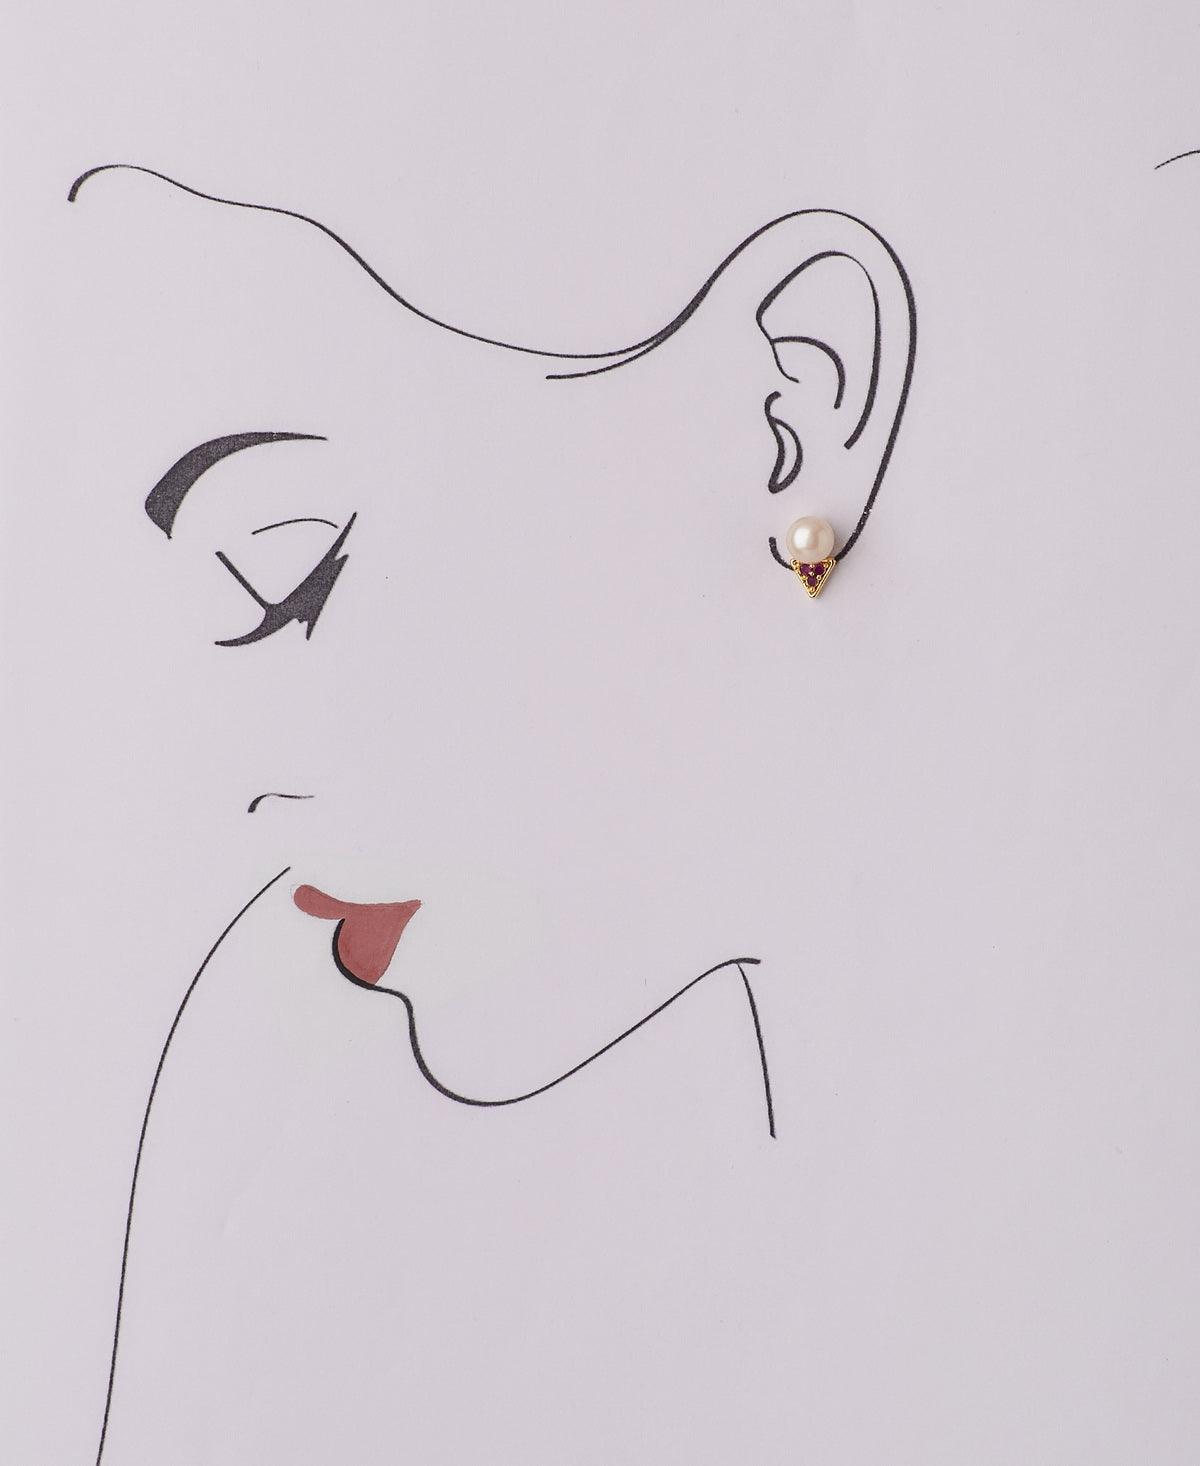 Elegant Stud Pearl Earring - Chandrani Pearls